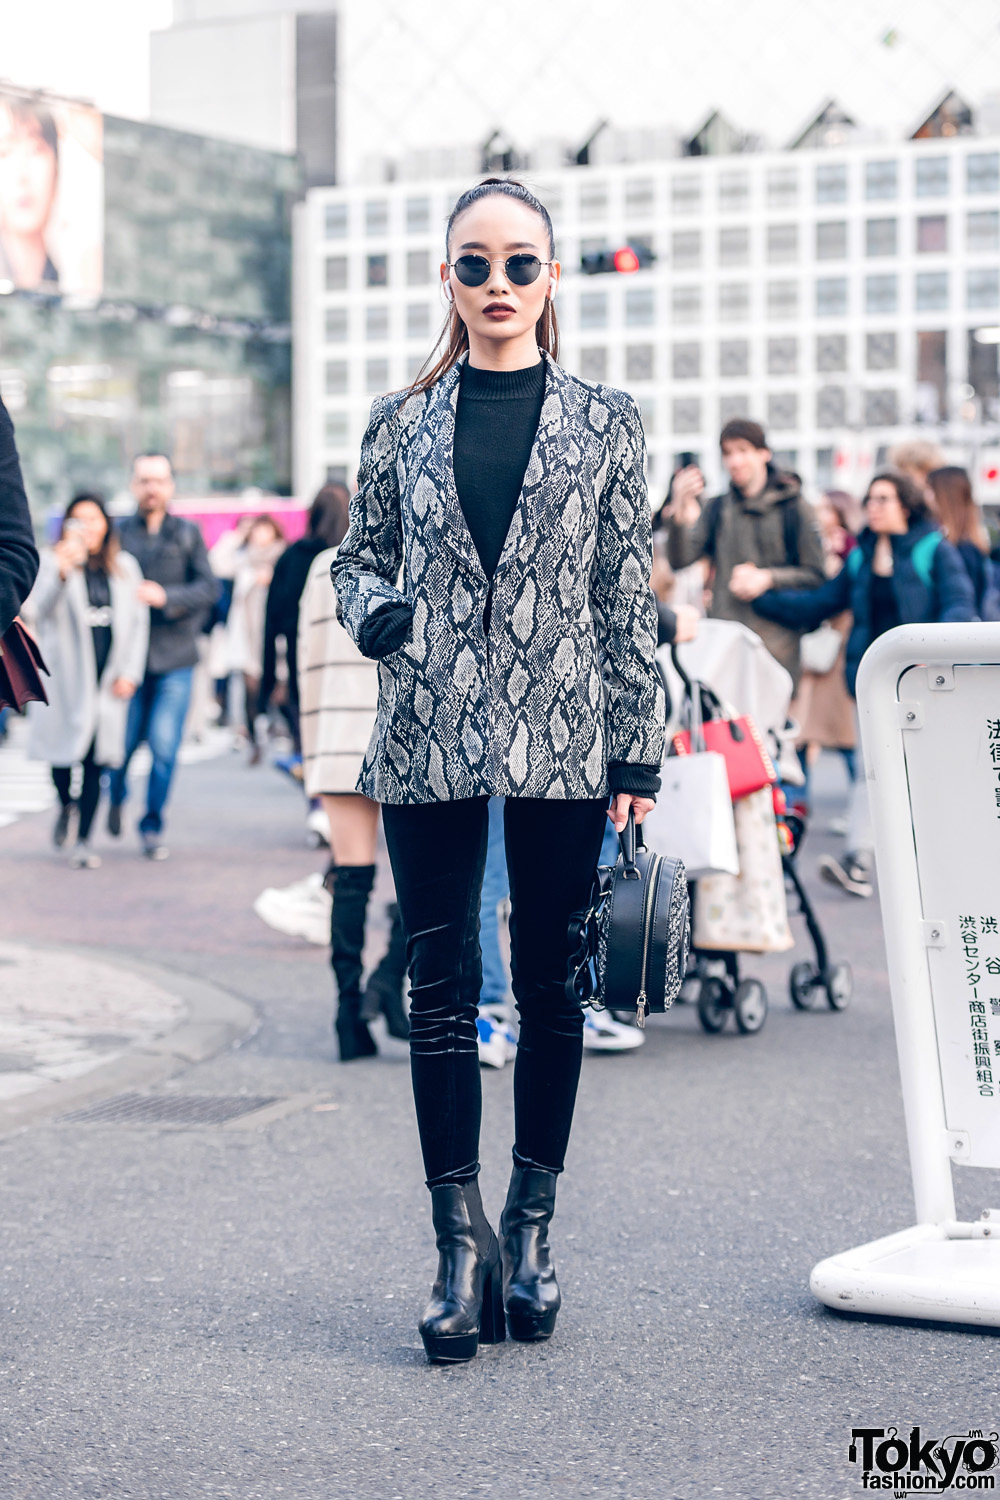 Chic Monochrome Shibuya Street Style w/ Ponytail, Aviator Sunglasses, Alice & Olivia Snakeskin Blazer, Juemi, Guess Handbag & Platform Boots